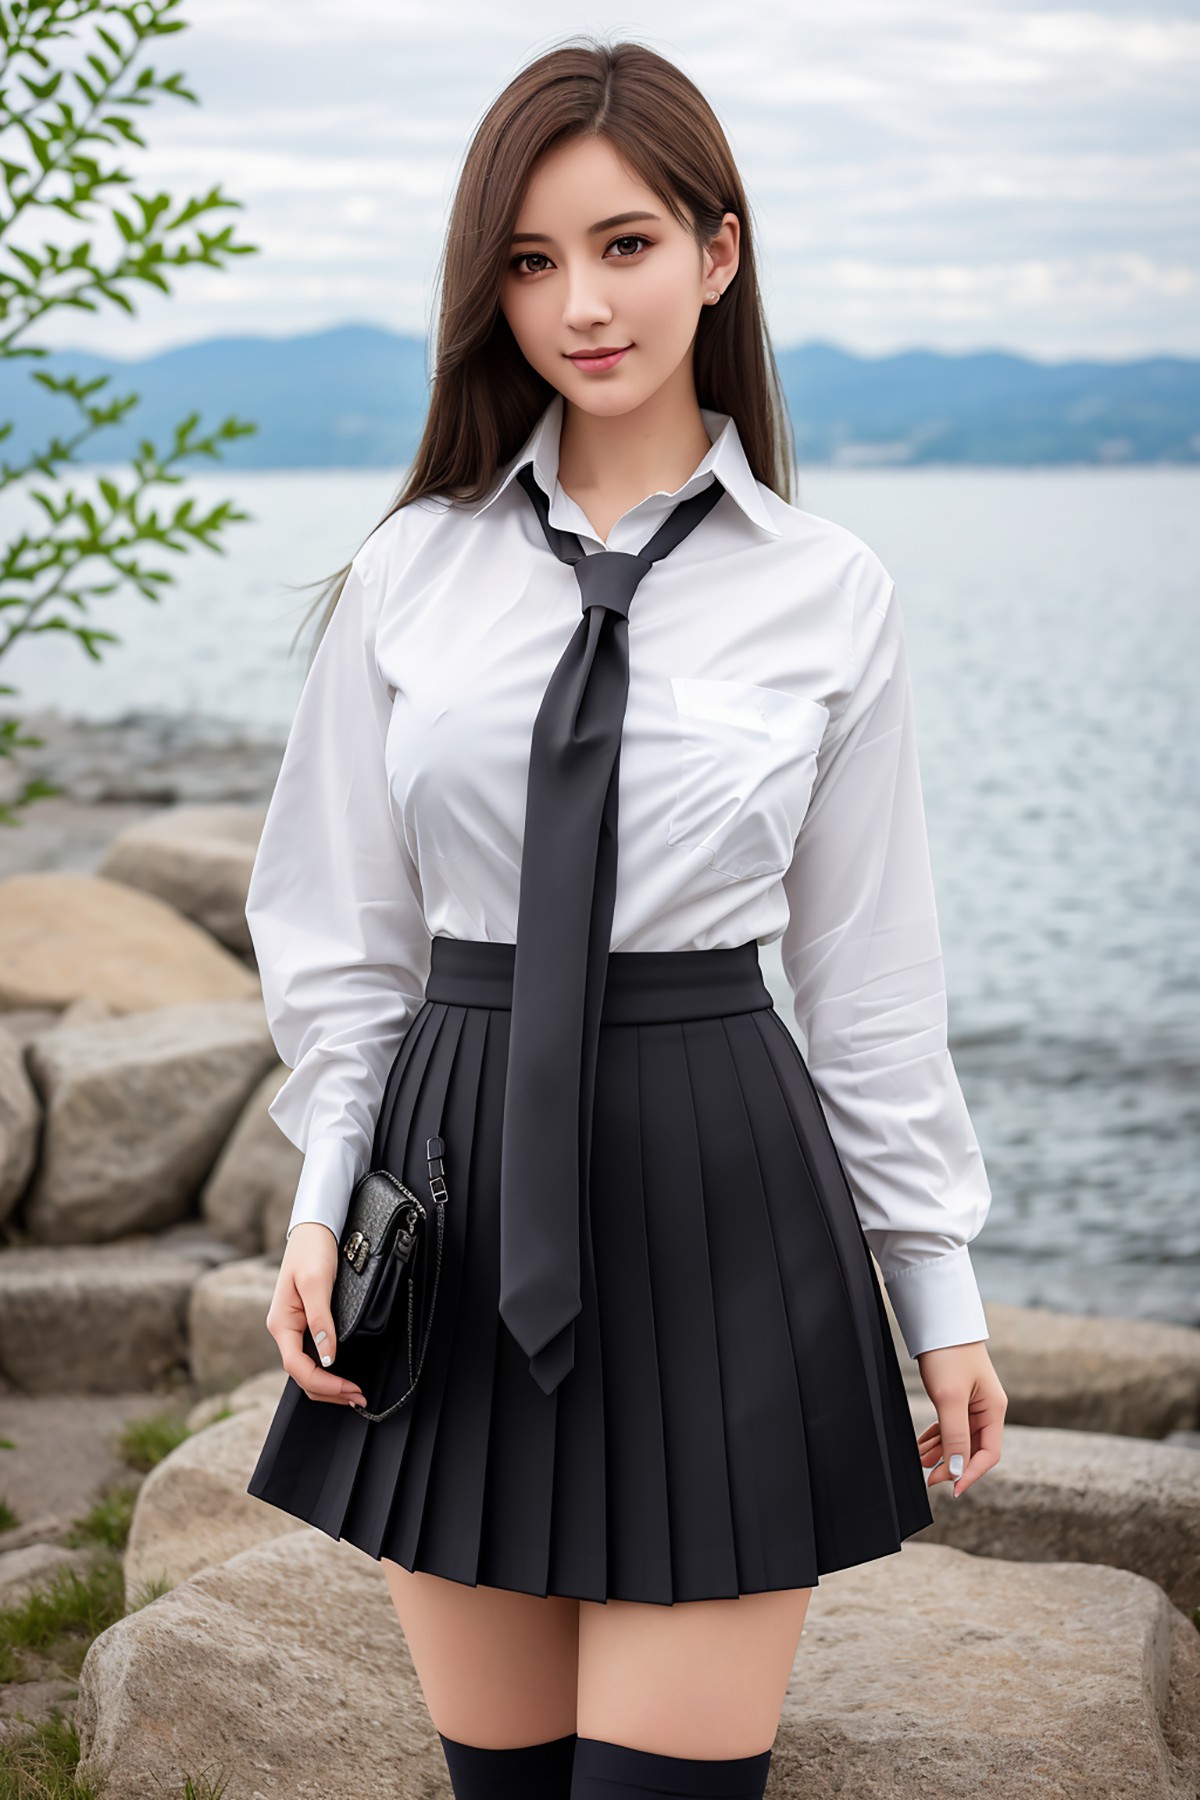 AIModel Vol 133 Sexy White Shirt With Black Short Skirt 0030 7454637942.jpg